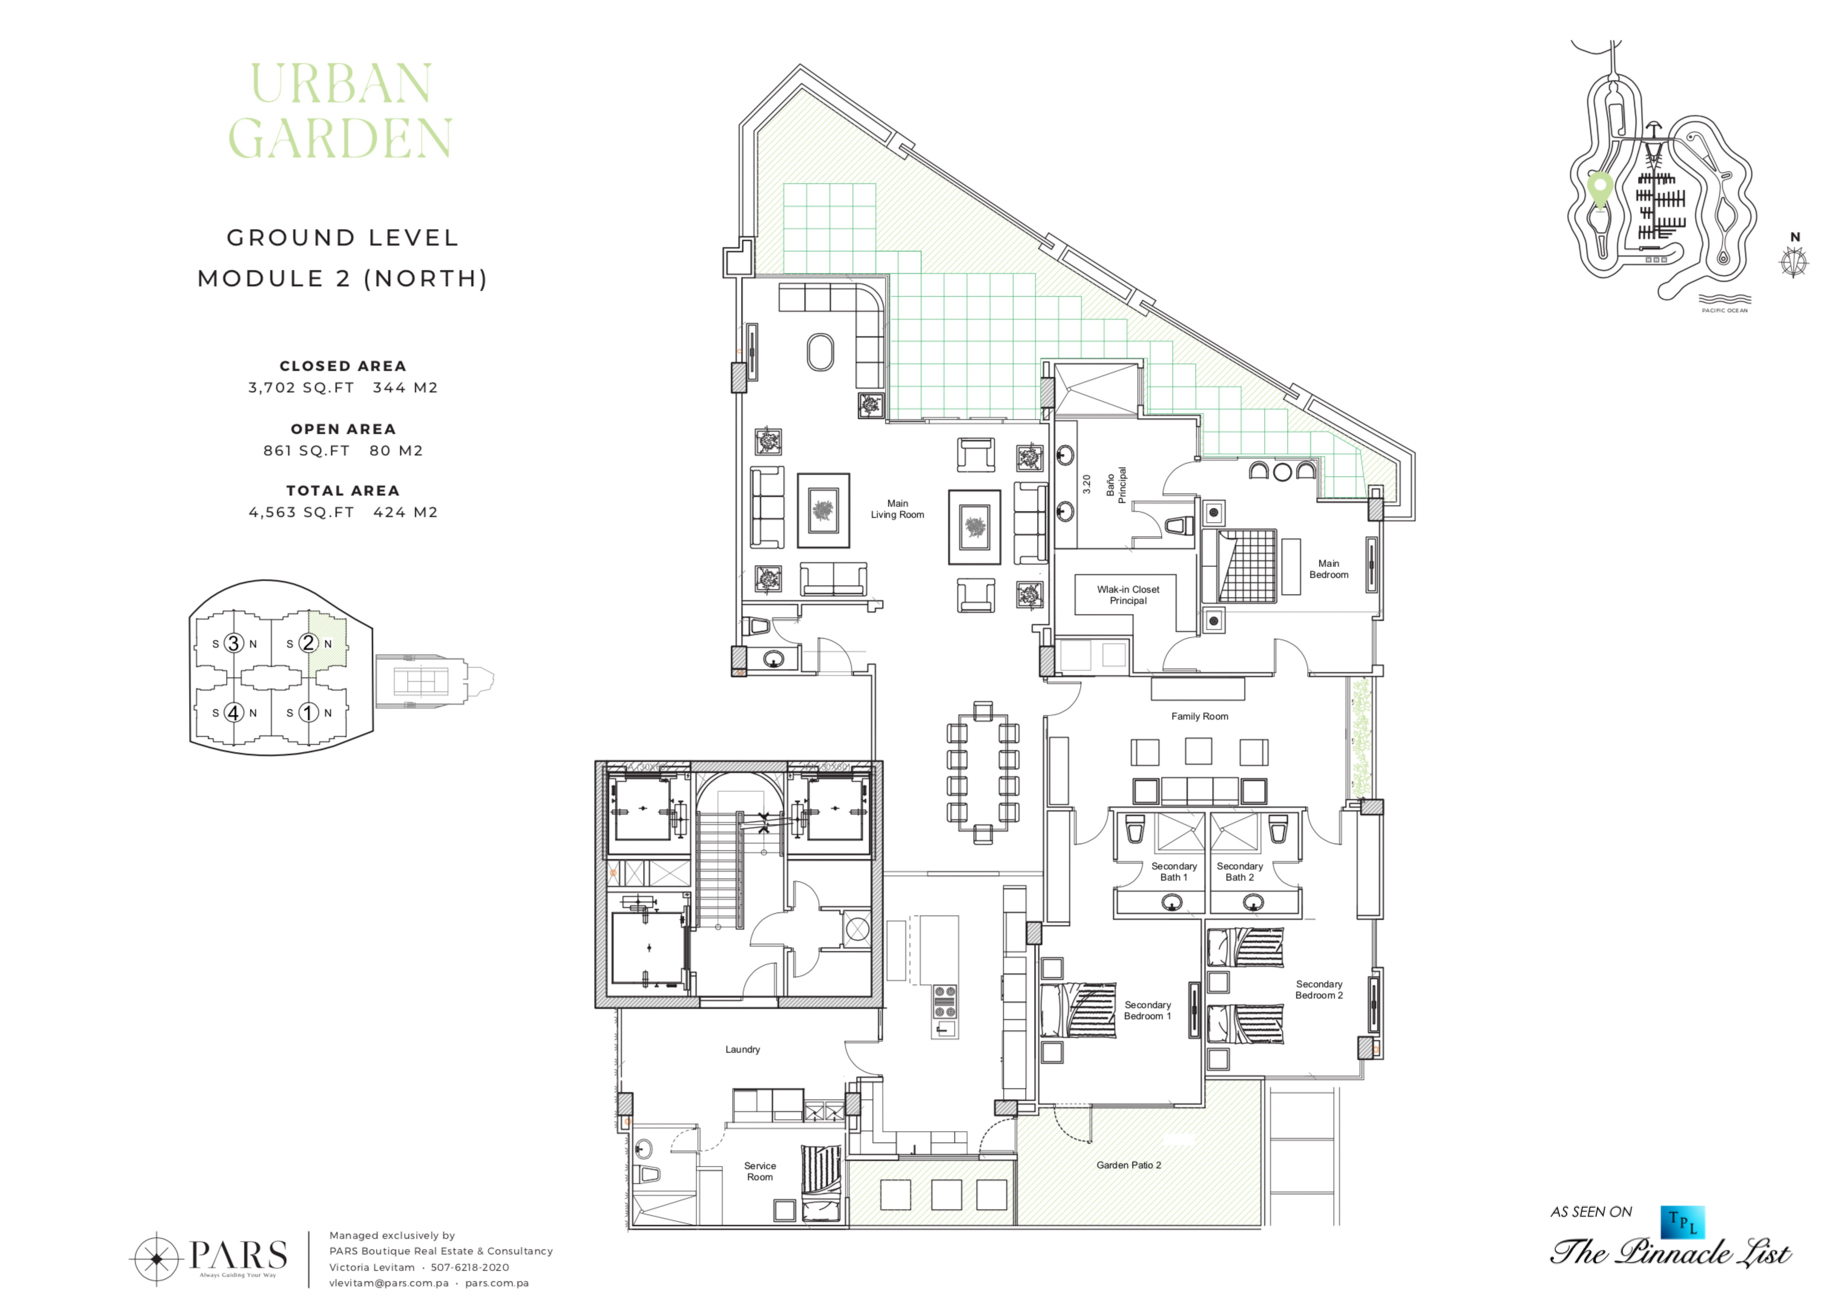 Urban Garden Apartment – Ocean Reef Island, Panama – Ground Level Module 2 Floor Plan